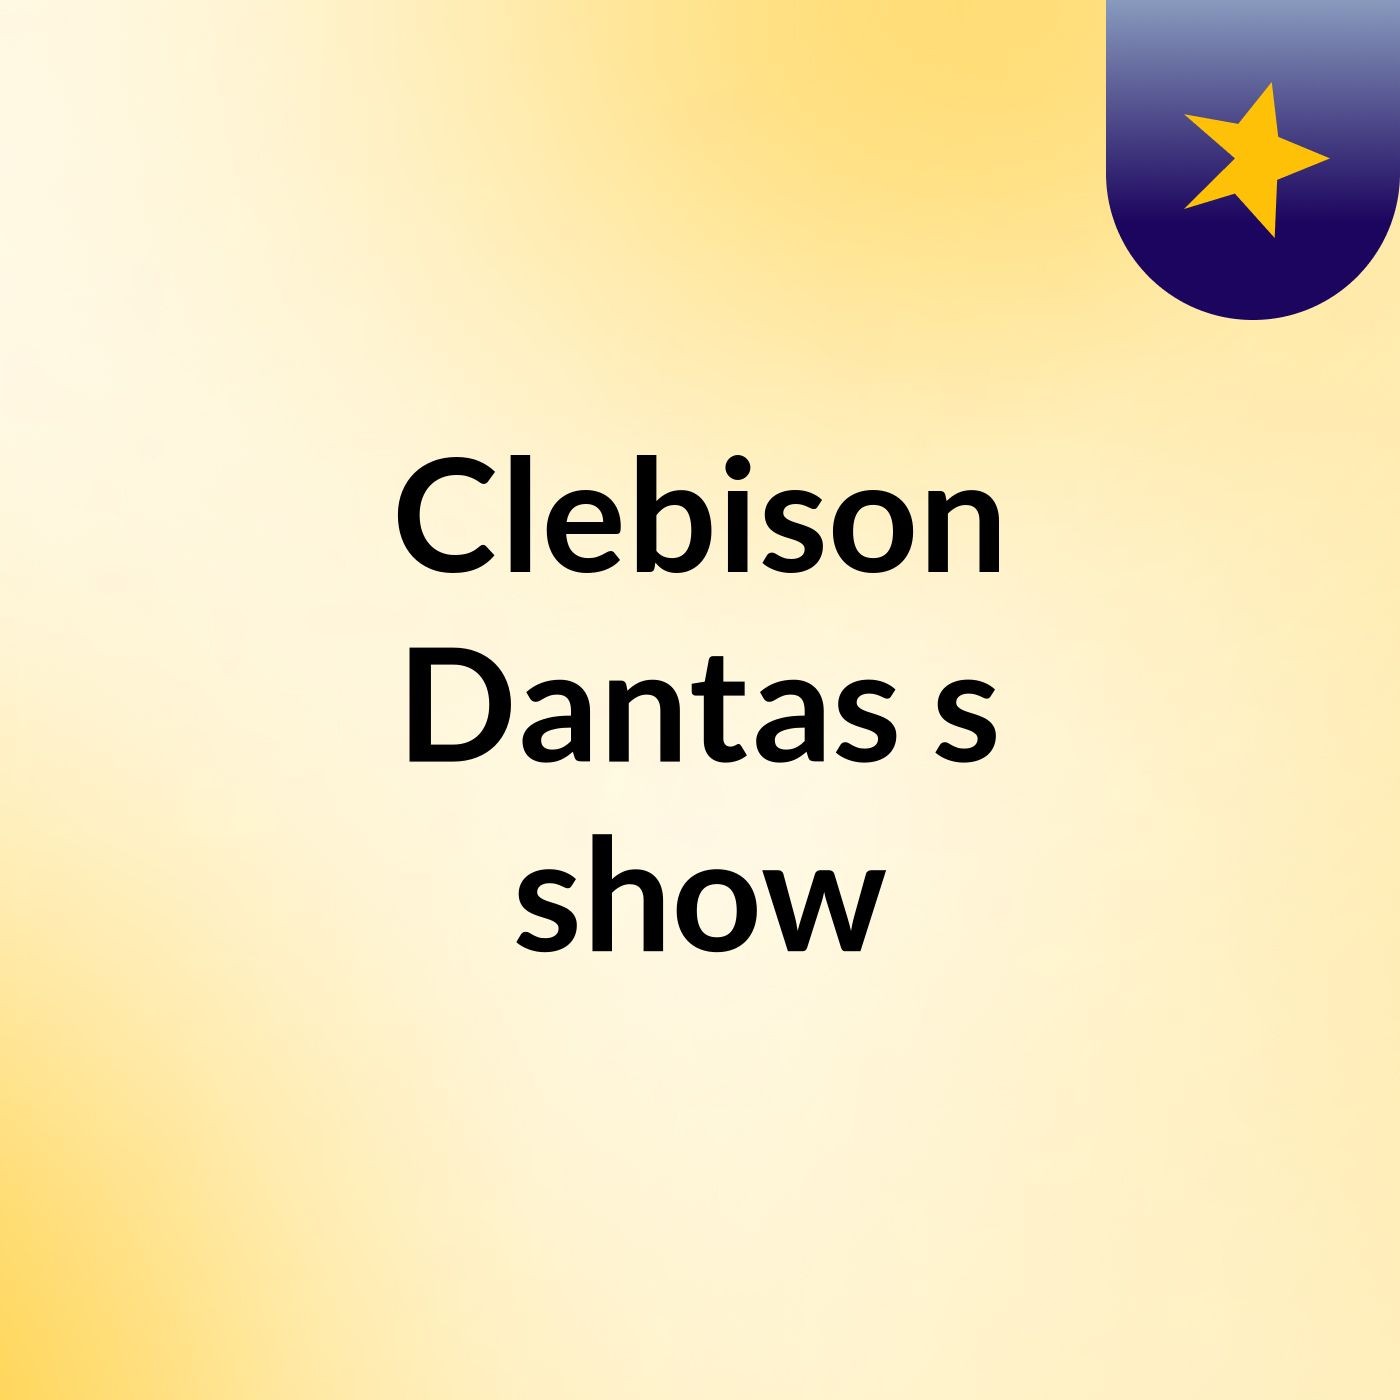 Clebison Dantas's show